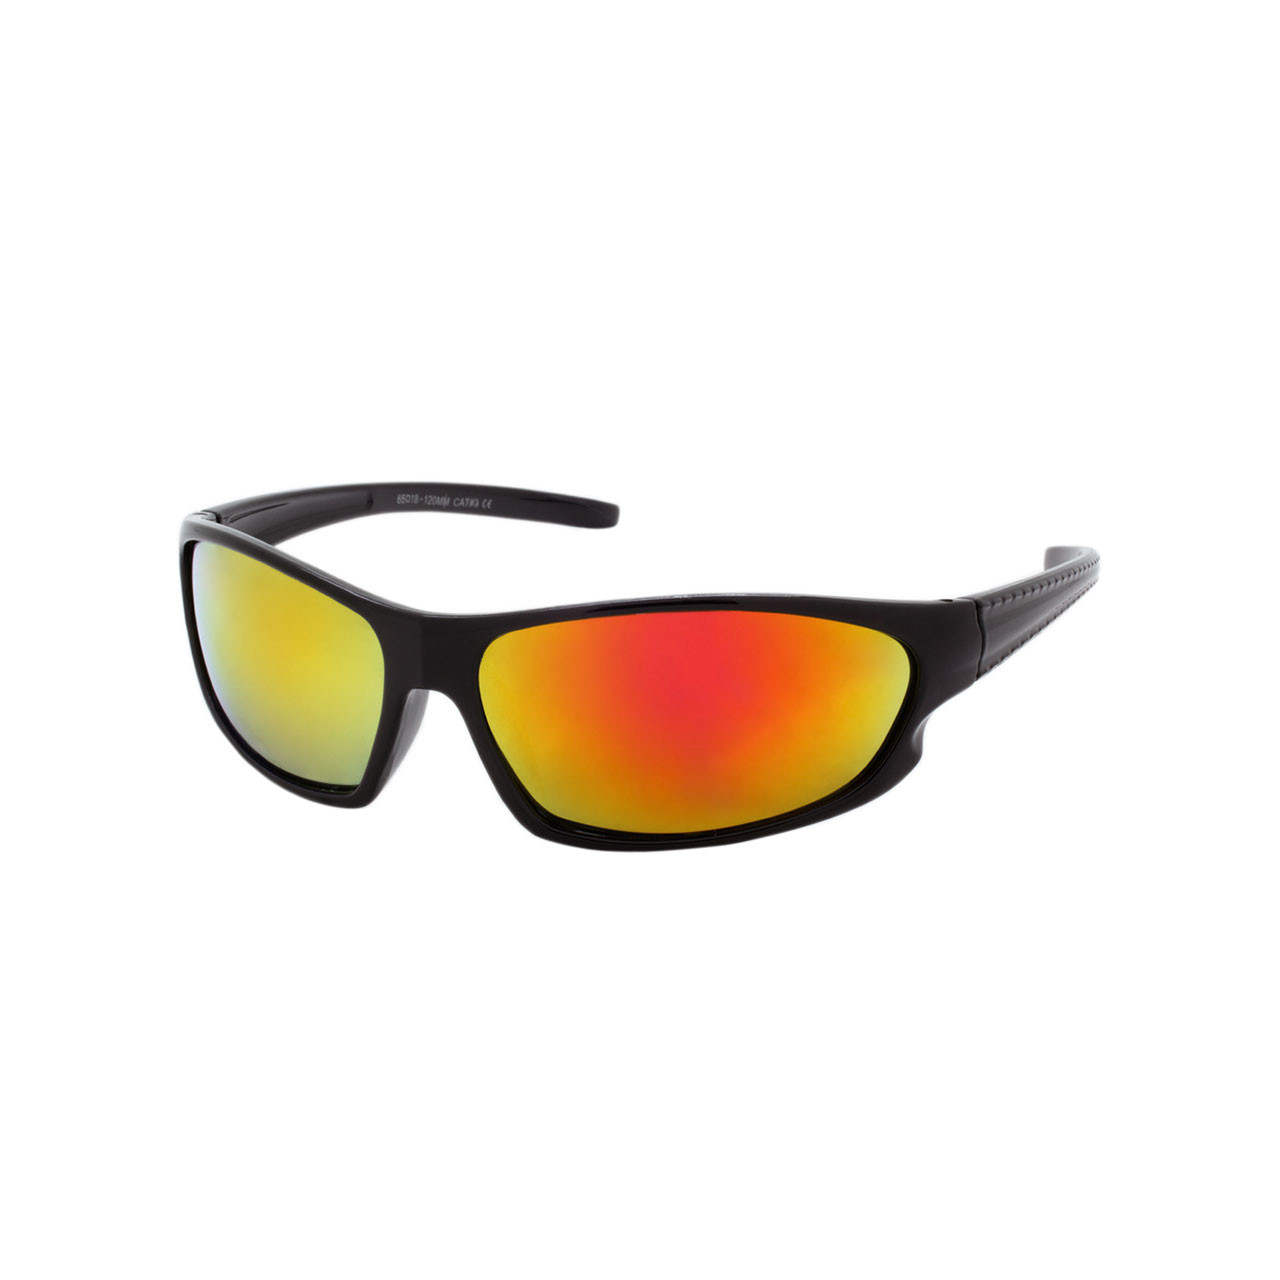 MENS SPORT SUNGLASSES WHOLESALE I ASST. 12 PCS I DZN12 - Shark Eyes, Inc. - Wholesale  Sunglasses, Reading Glasses, & Displays